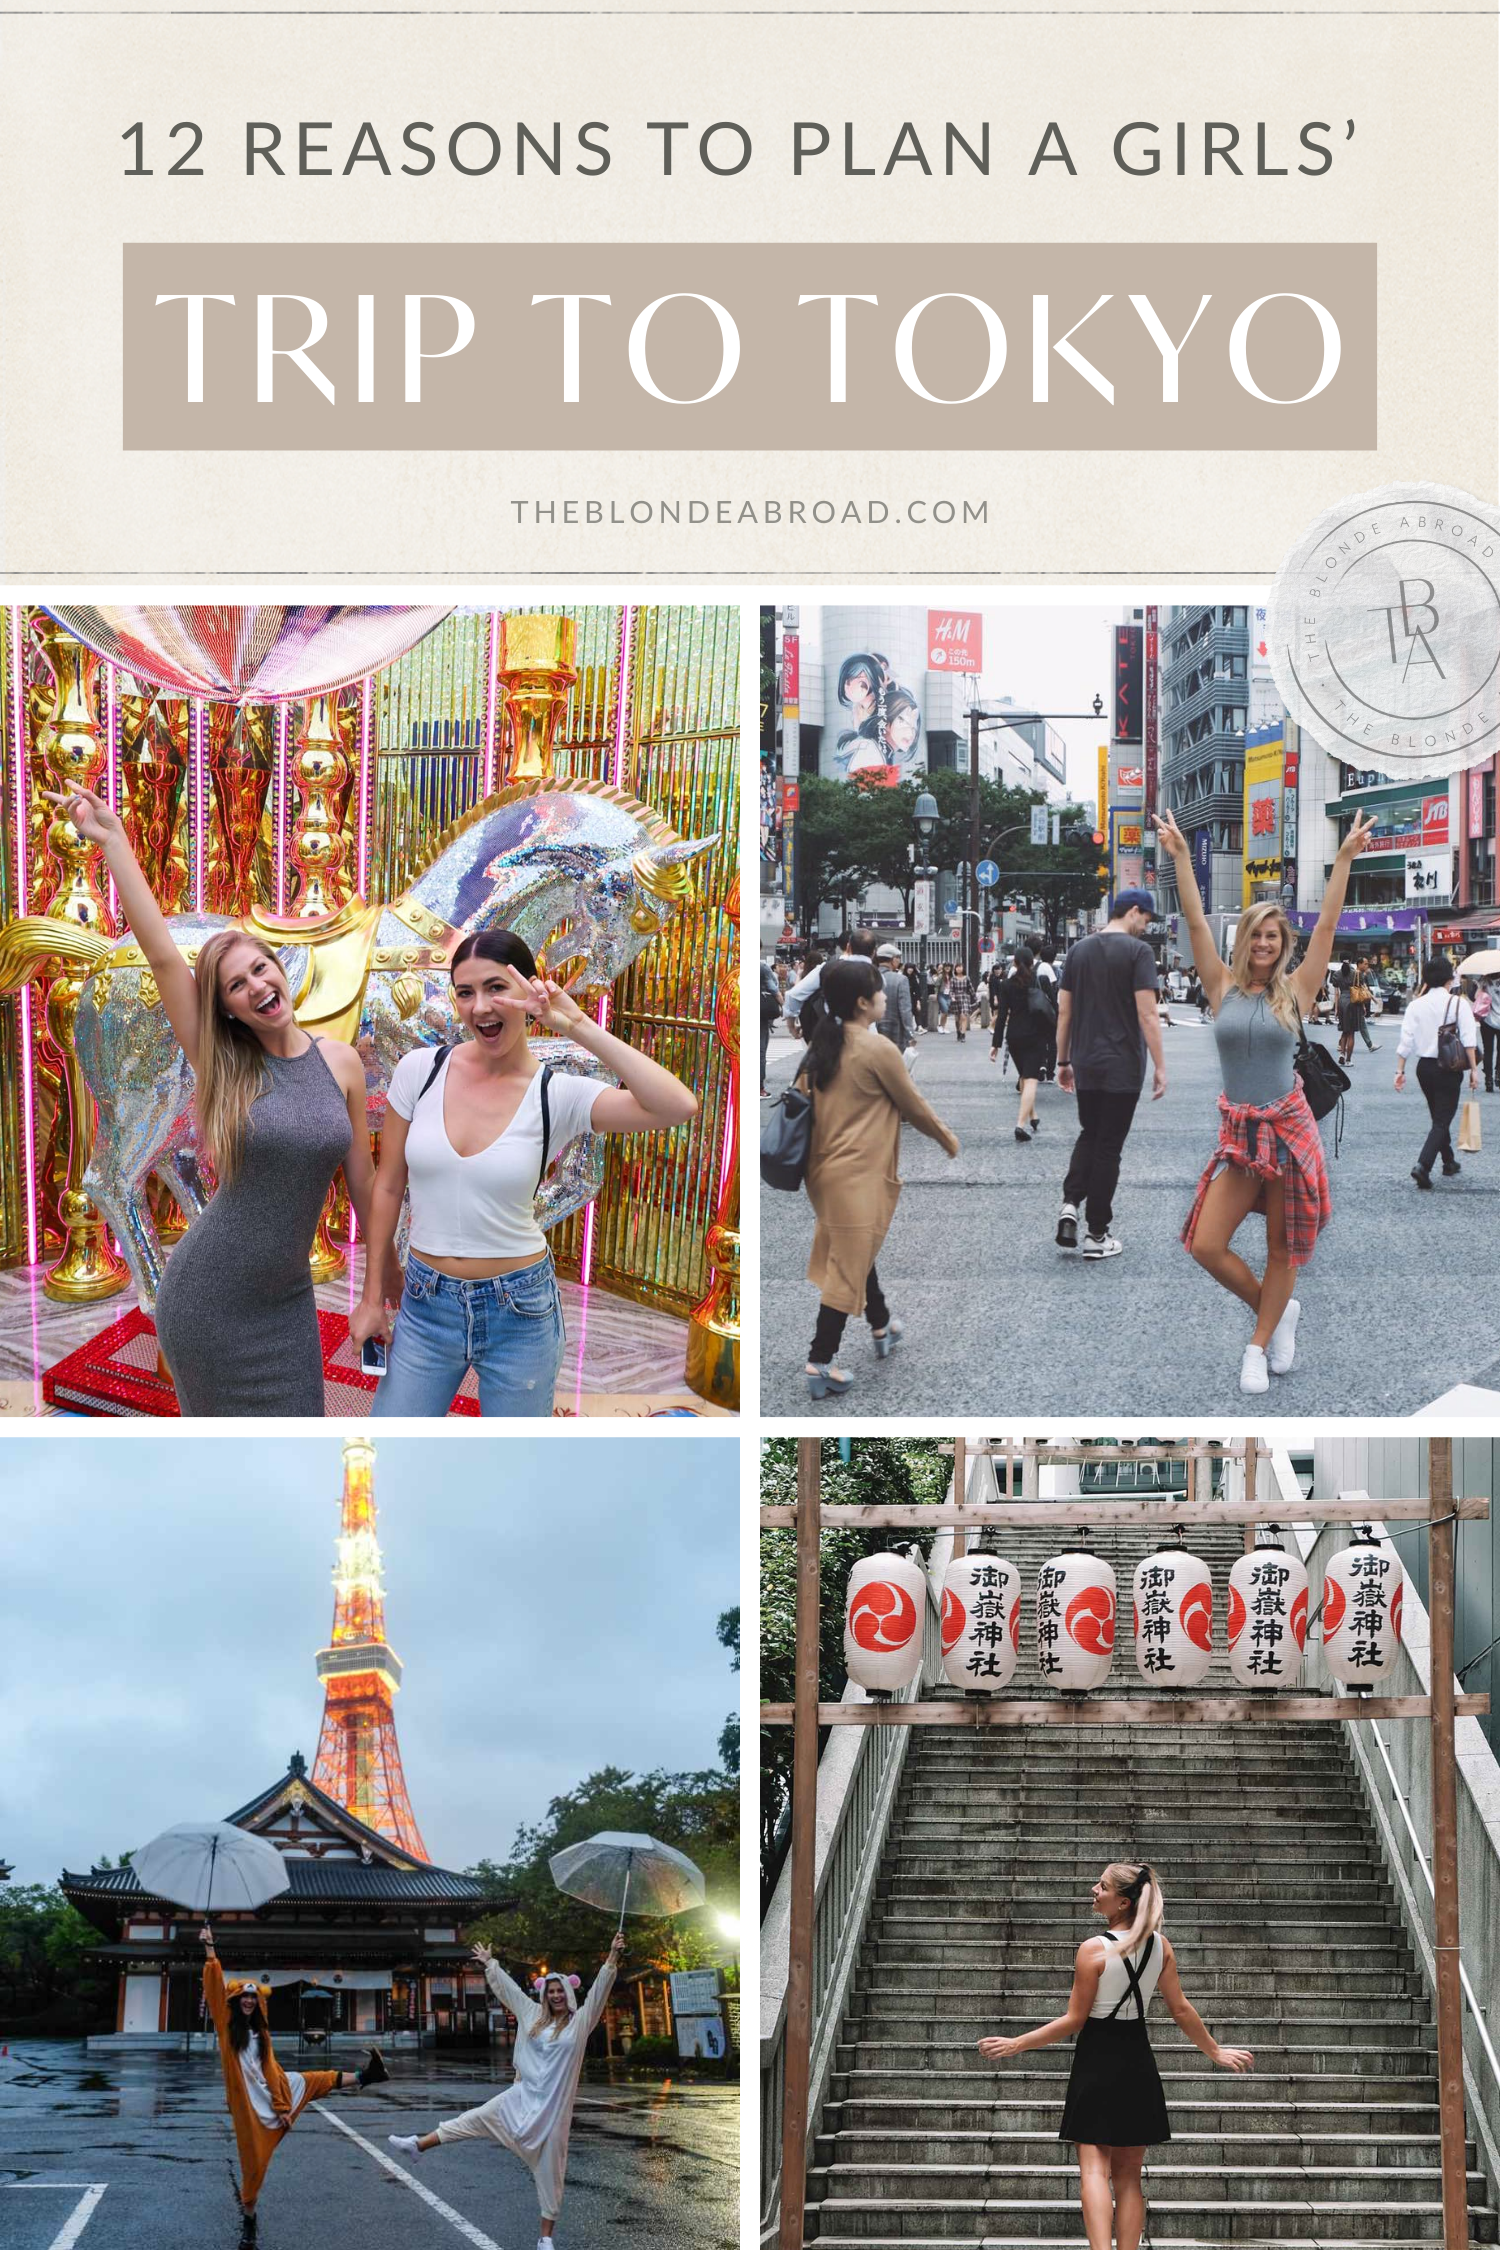 12 Reasons to Plan a Girls’ Trip to Tokyo